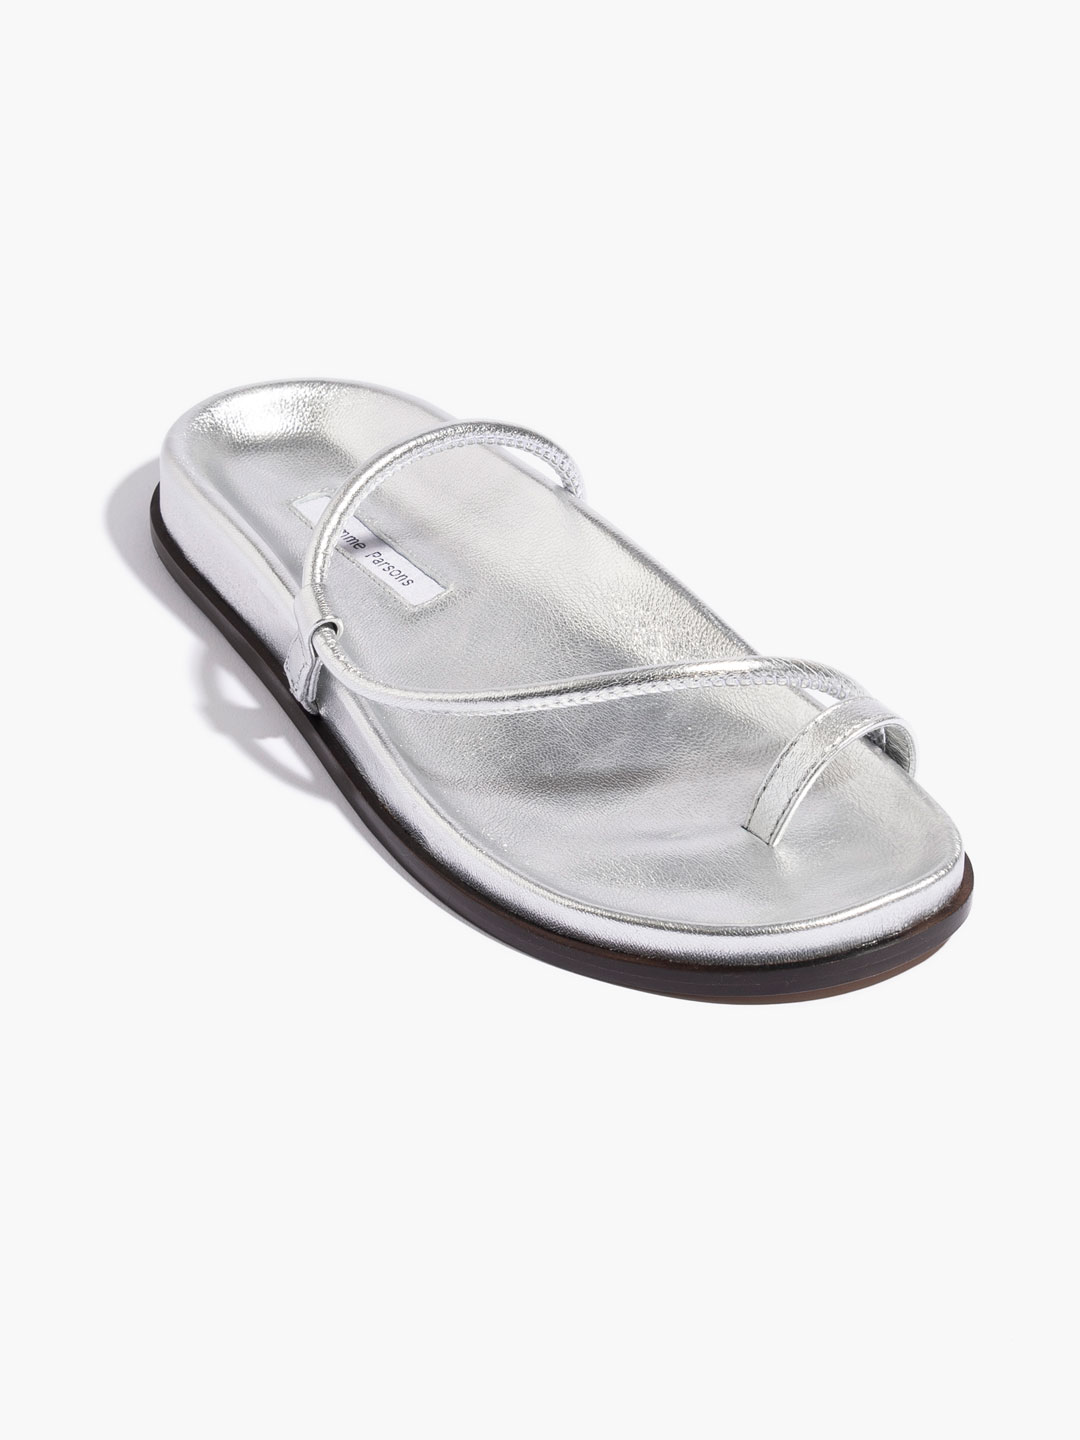 Bari Sandals - Silver